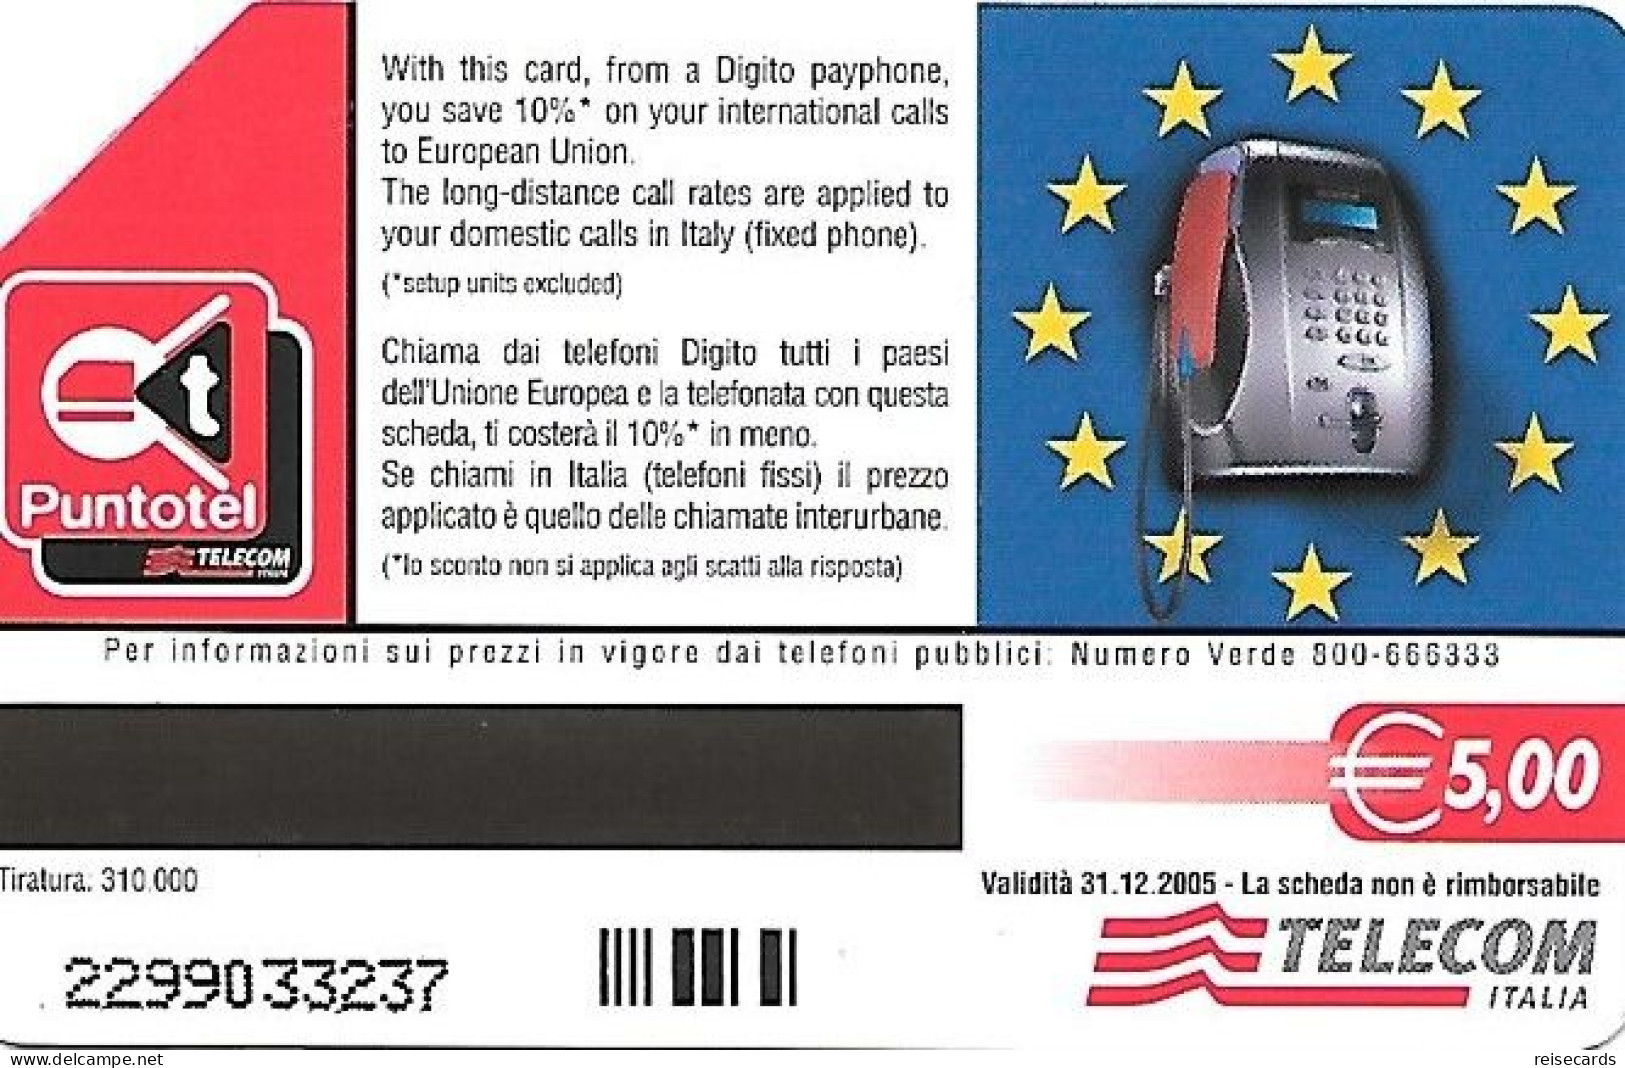 Italy: Telecom Italia Value € - Kisses From Pisa, Piazza Dei Miracoli - Public Advertising